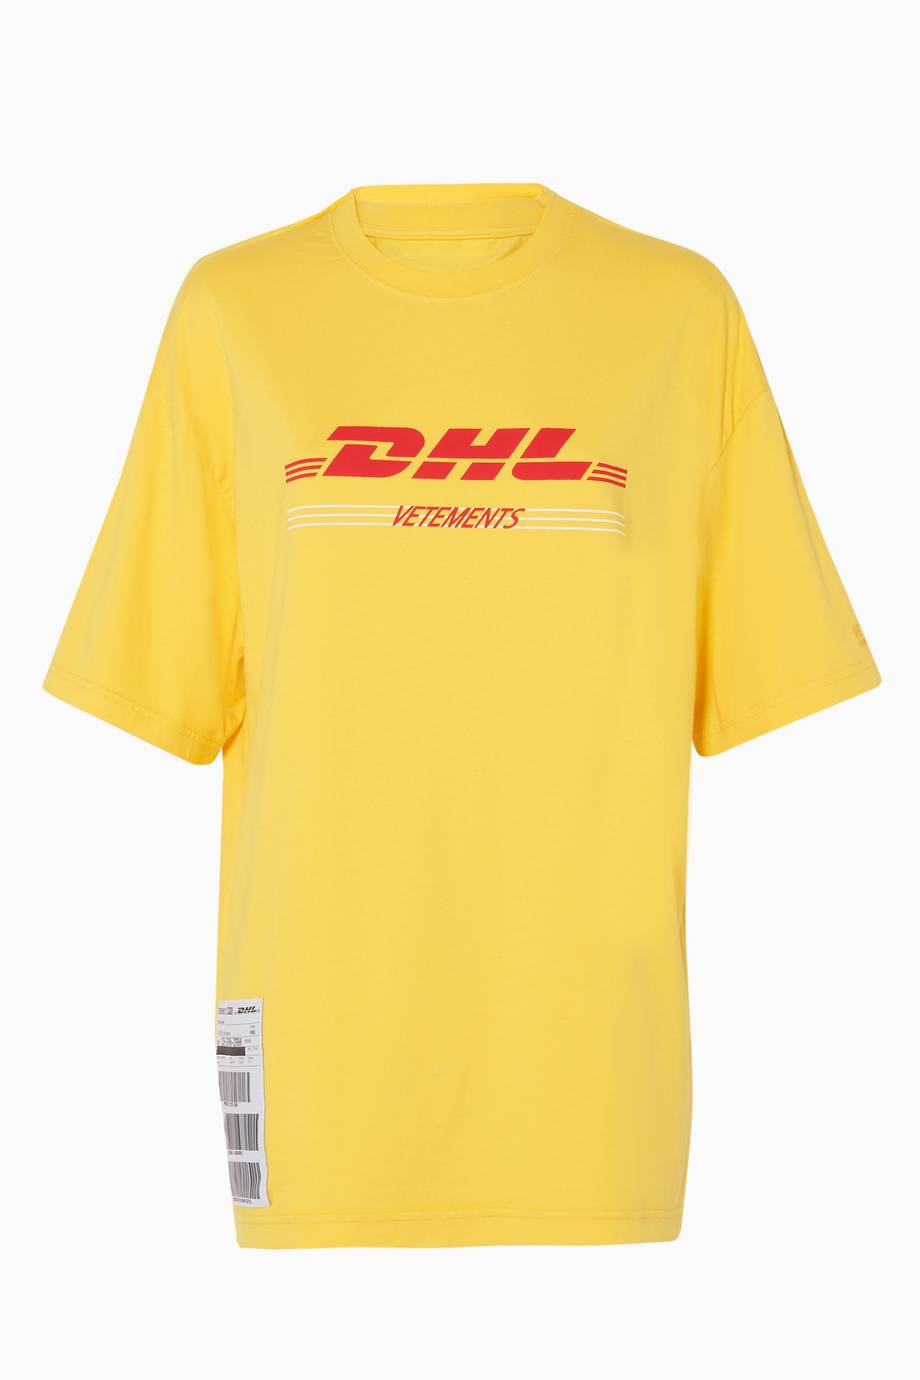 Shop Luxury Vetements Yellow DHL Printed T-Shirt | Ounass UAE